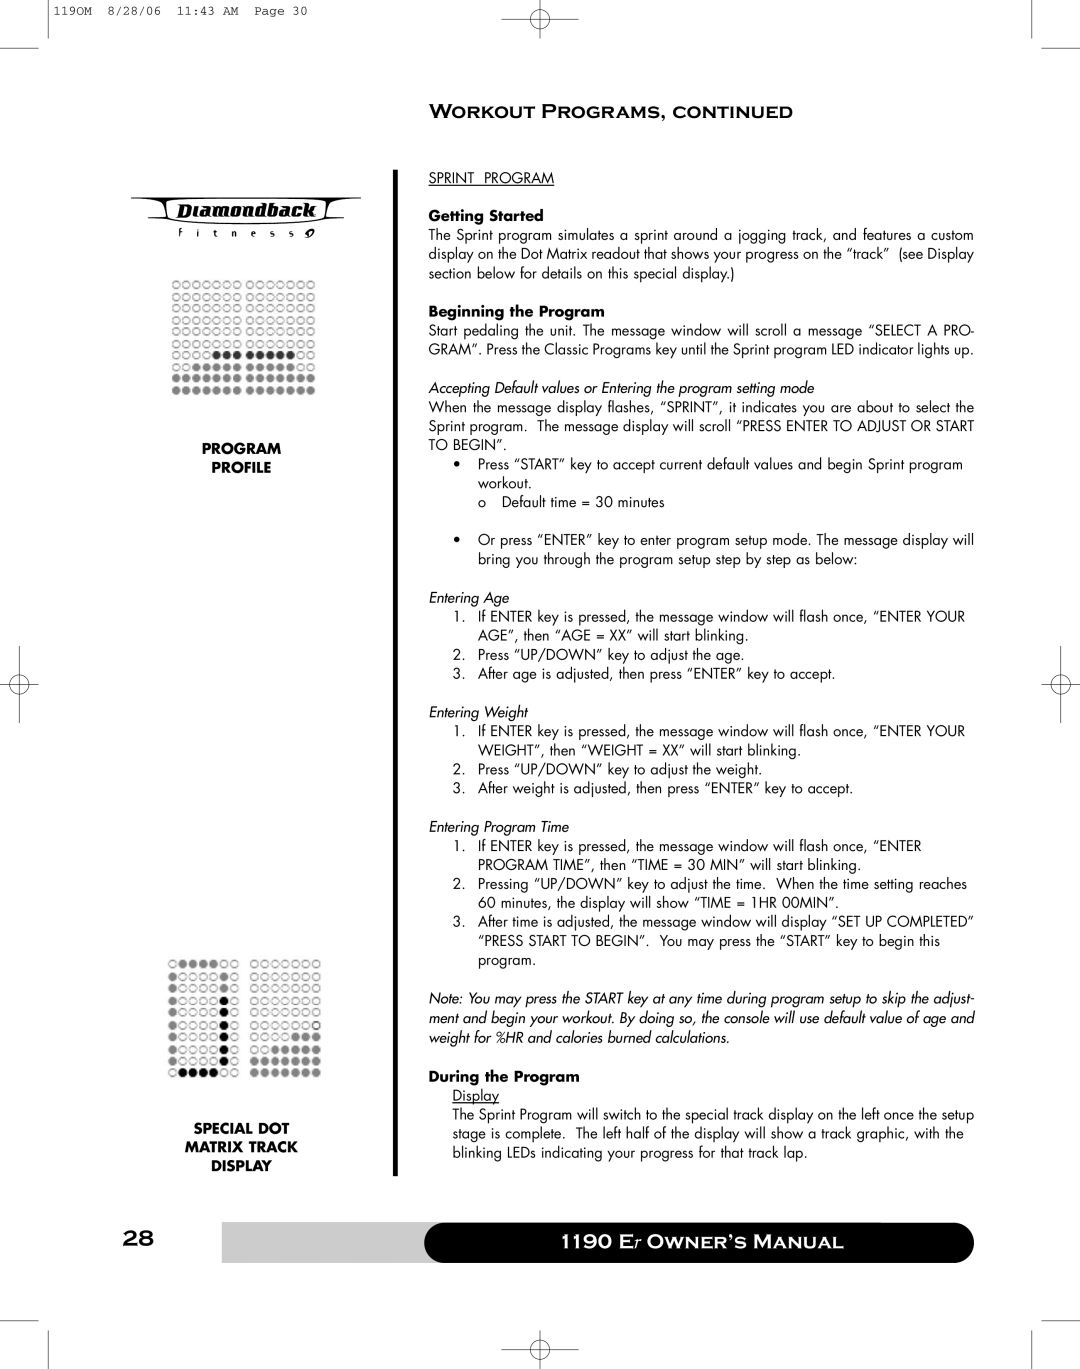 Diamondback 1190 Er manual Workout Programs, continued, Er Owner’s Manual, Program Profile Special Dot Matrix Track Display 